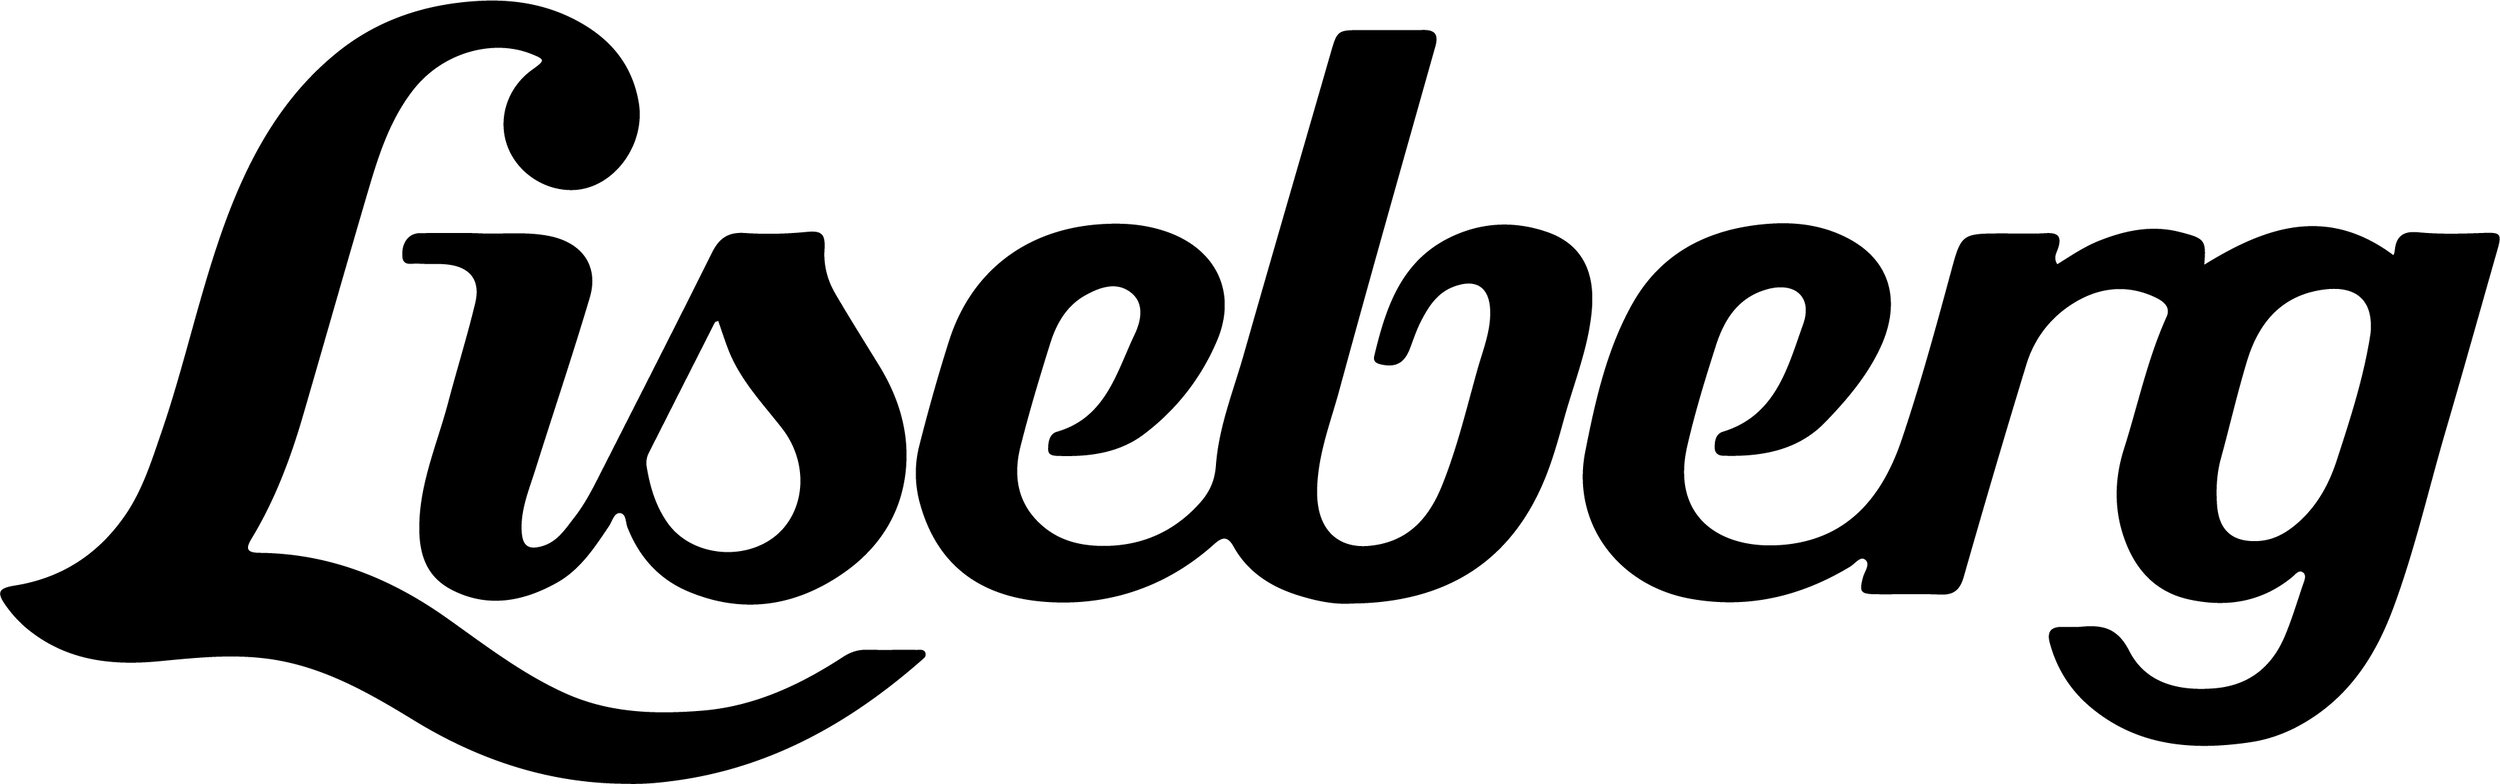 liseberg-logotyp-black.jpg